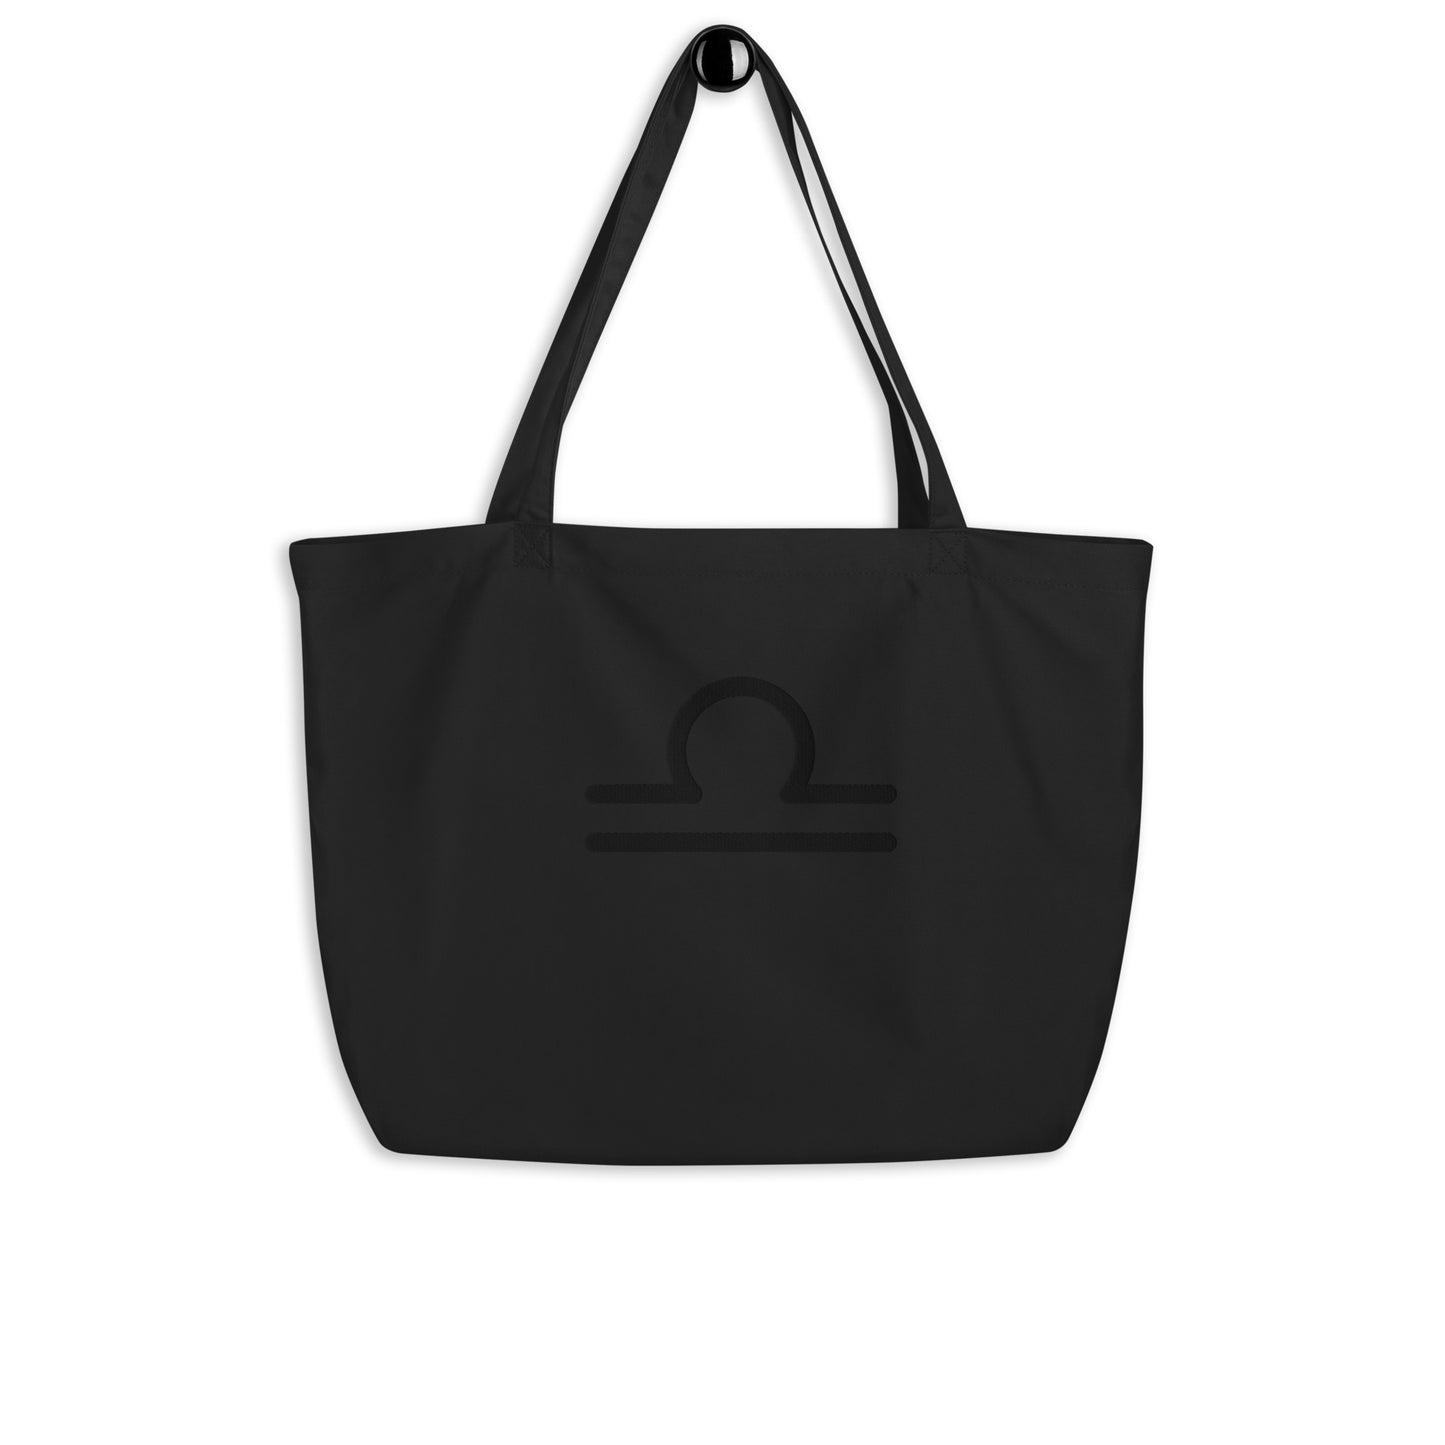 Libra - Large Open Tote Bag - Black Thread